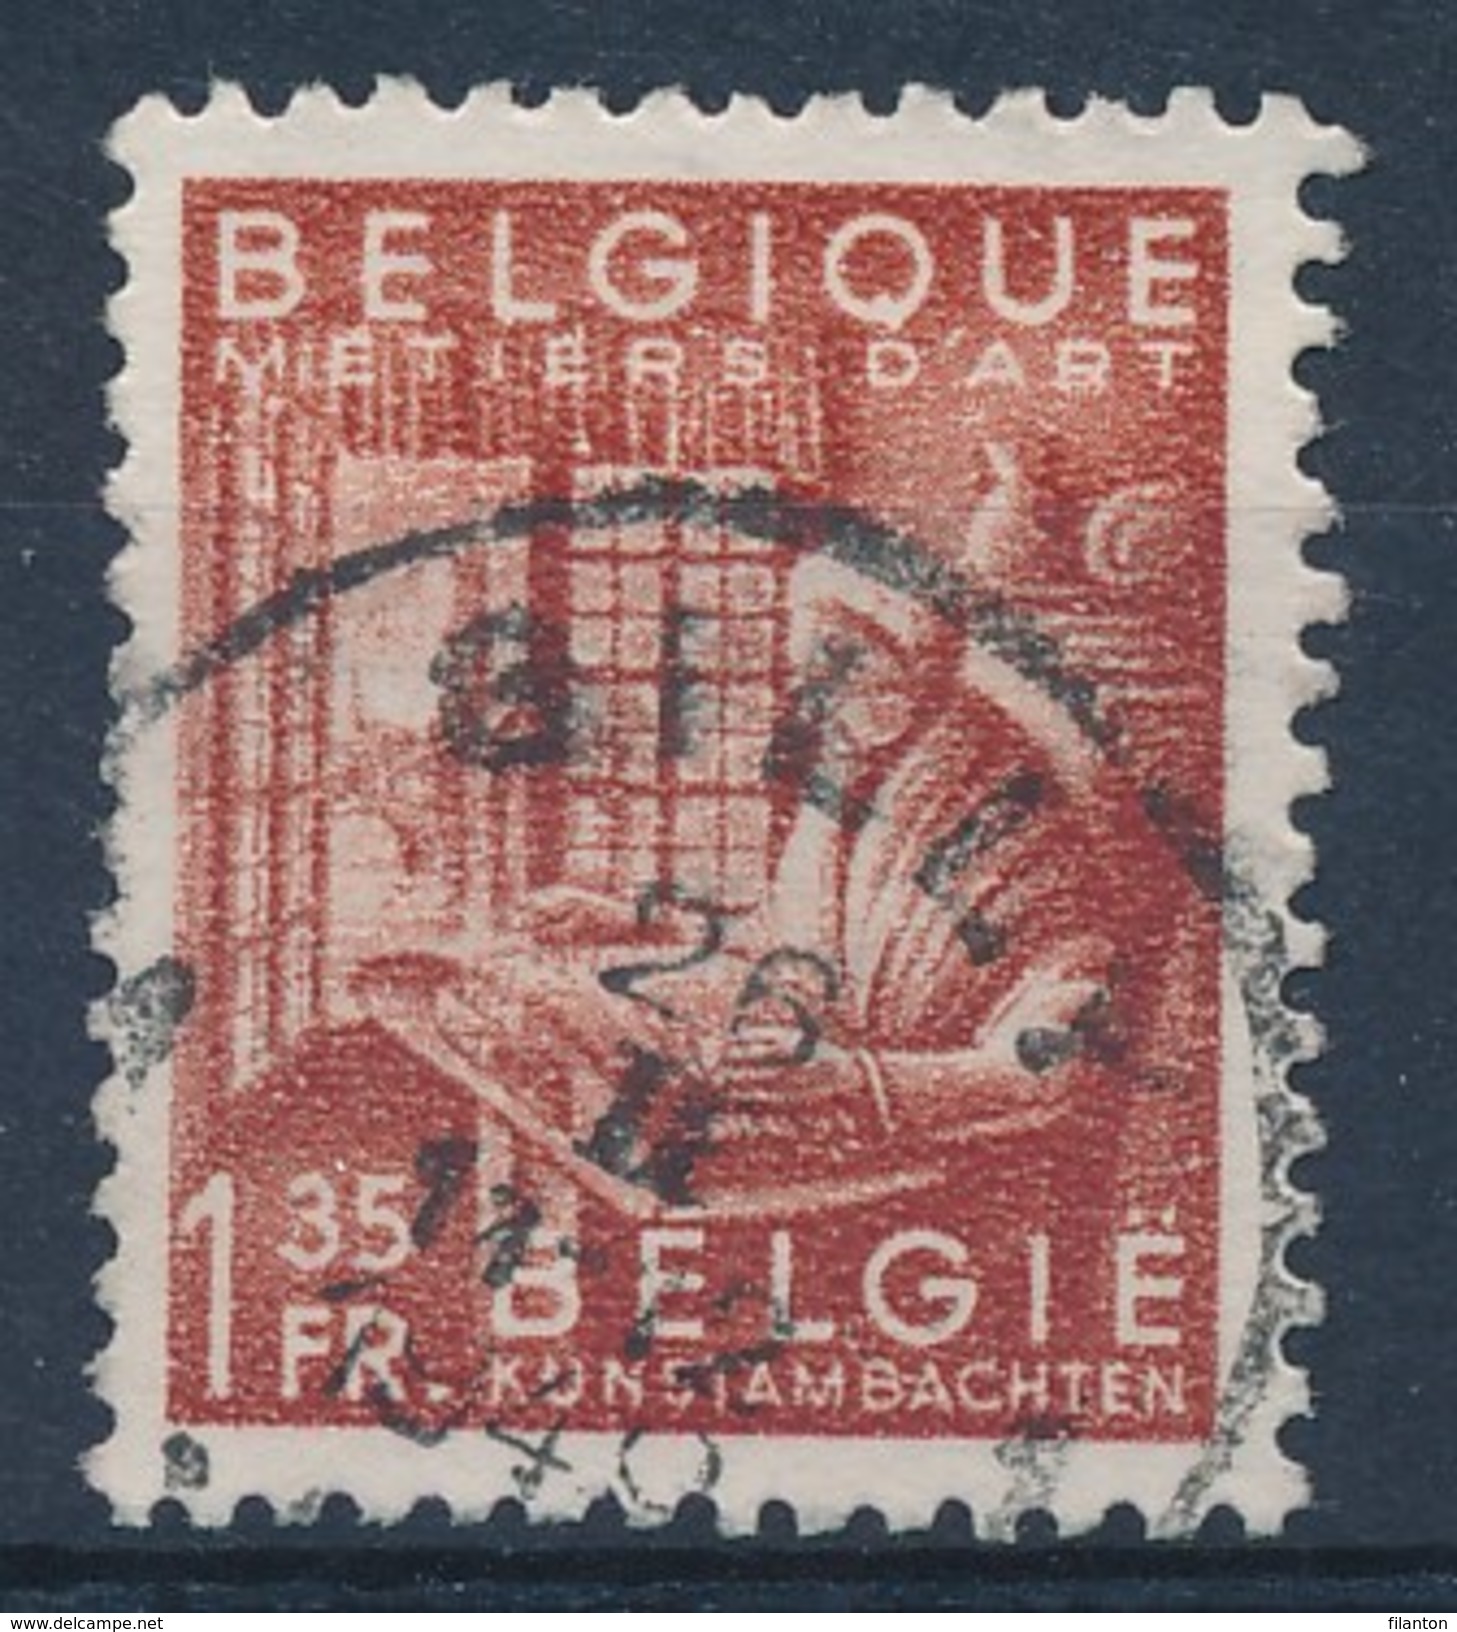 BELGIE - OBP Nr 762 - Export - Cachet  "SILLY 1" - (ref. ST-739) - 1948 Export